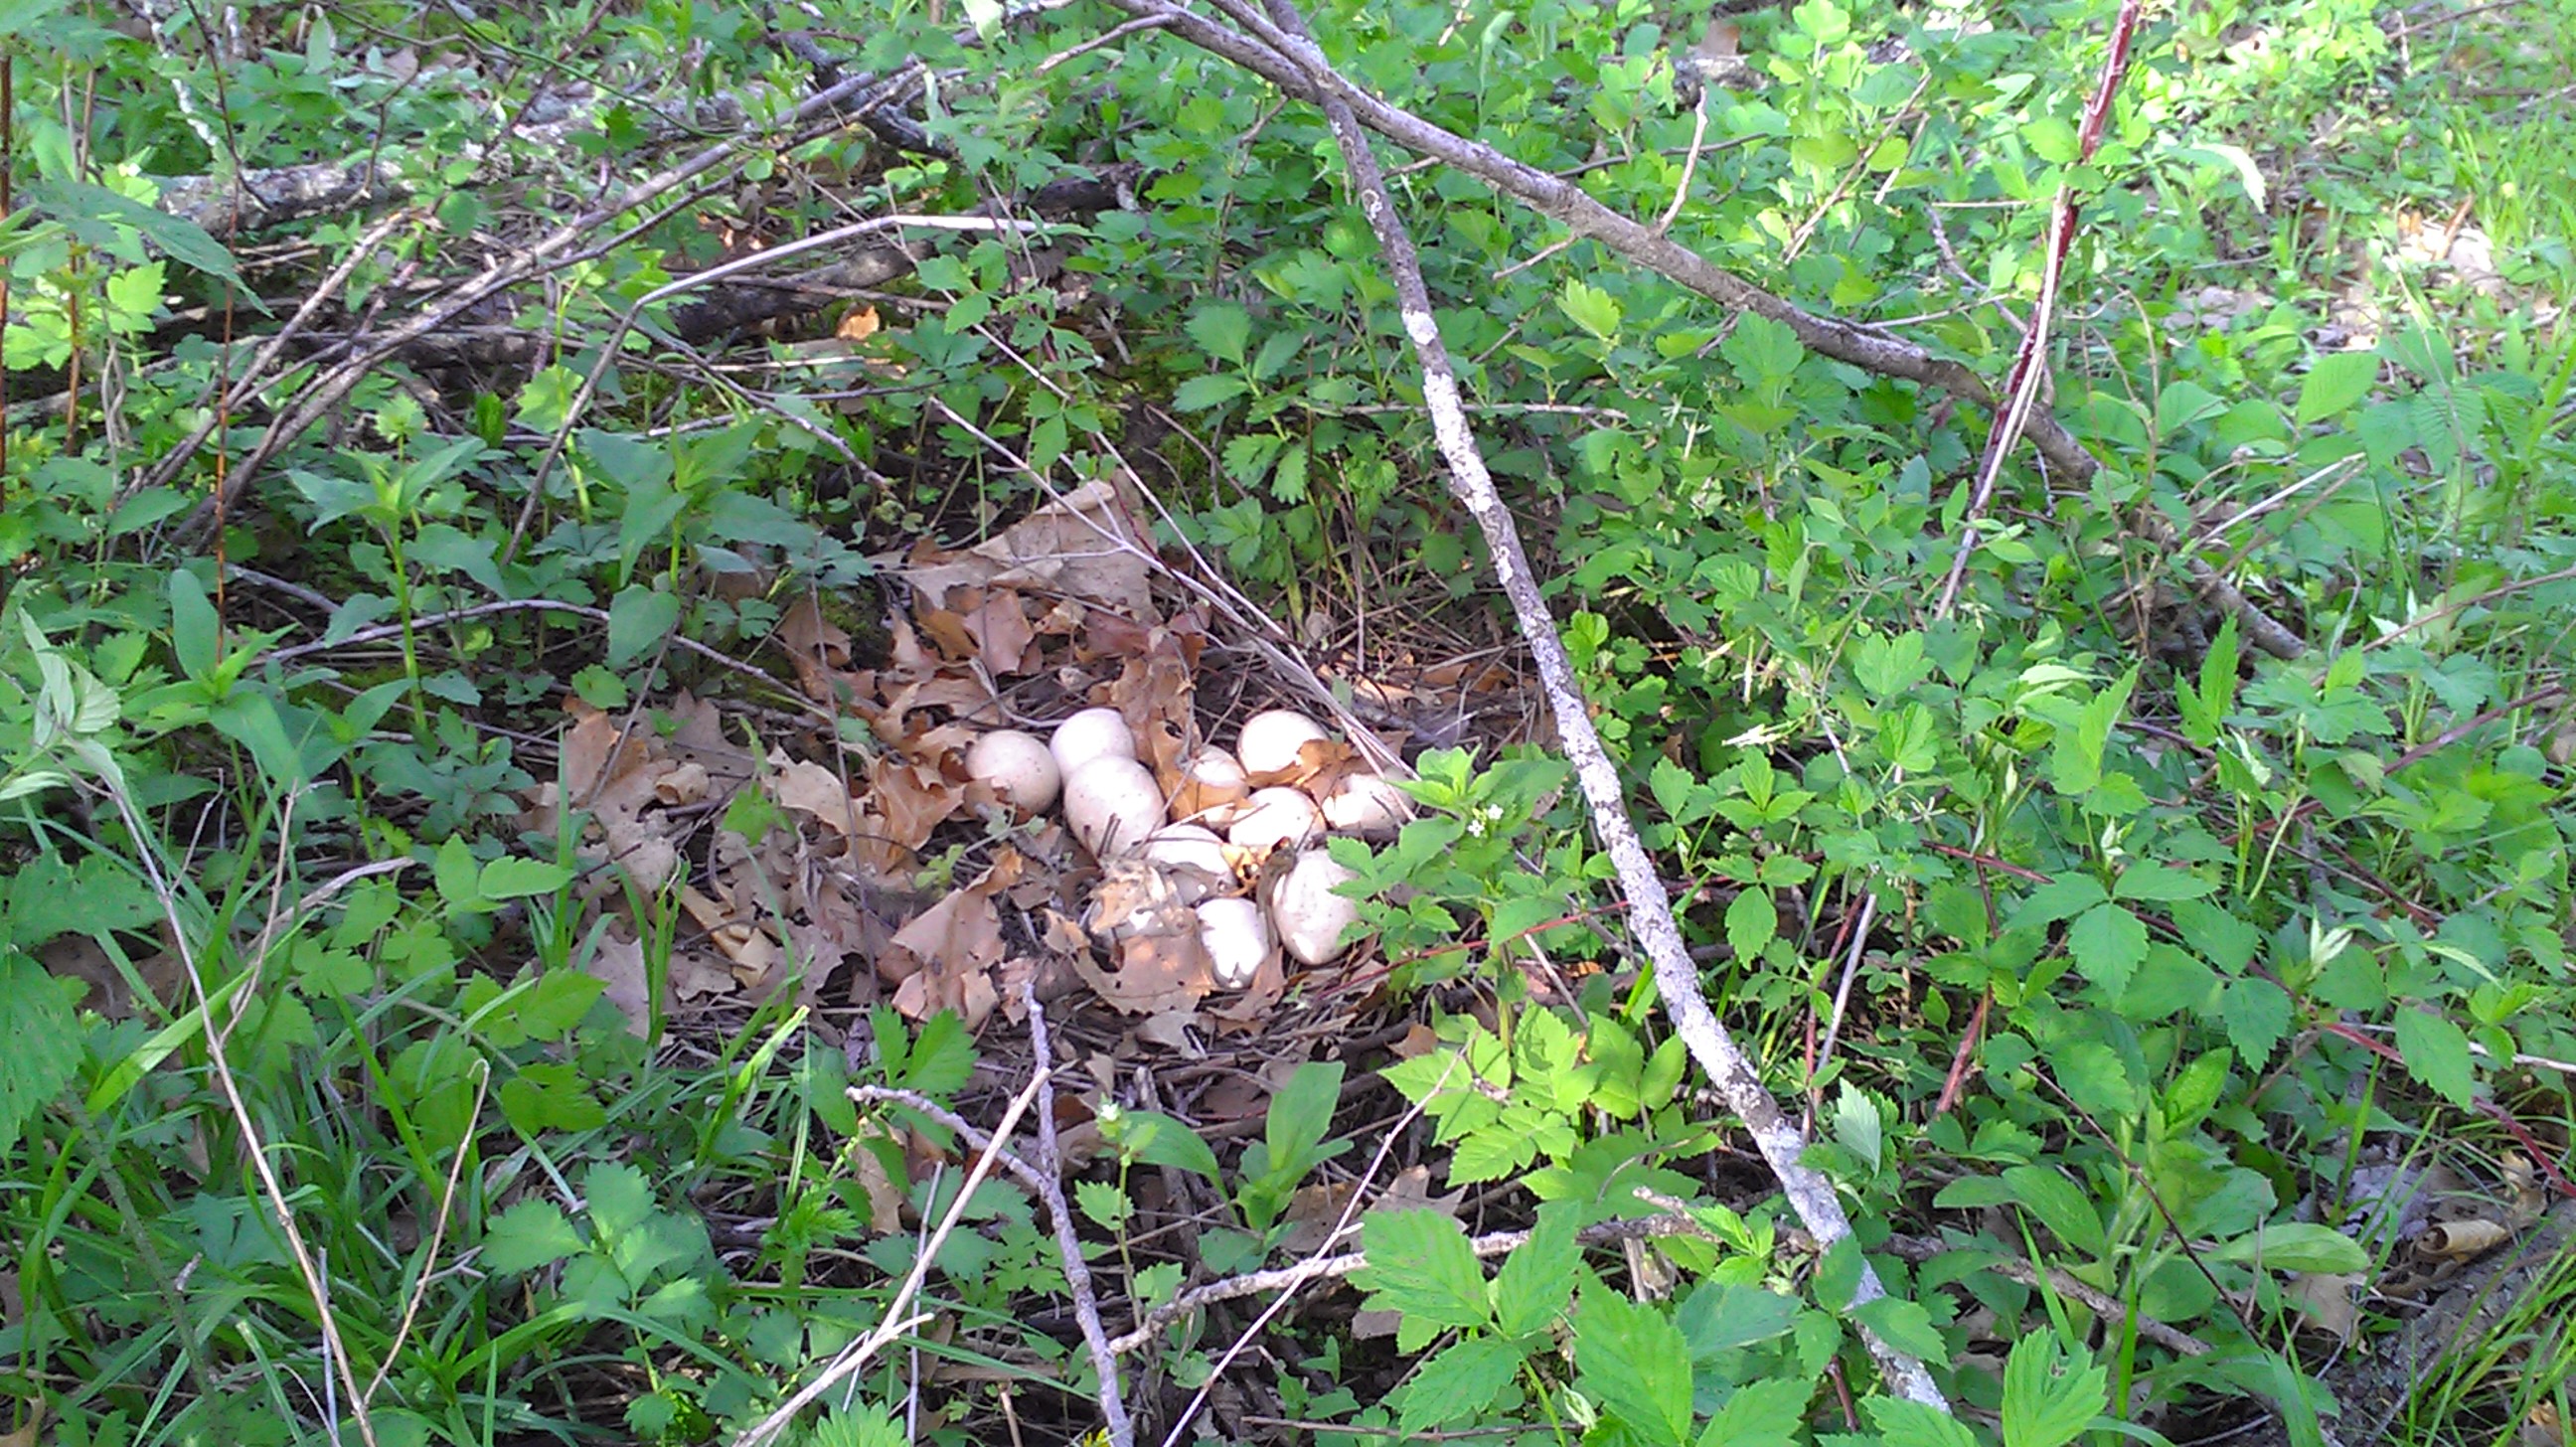 Turkey nest with eggs.